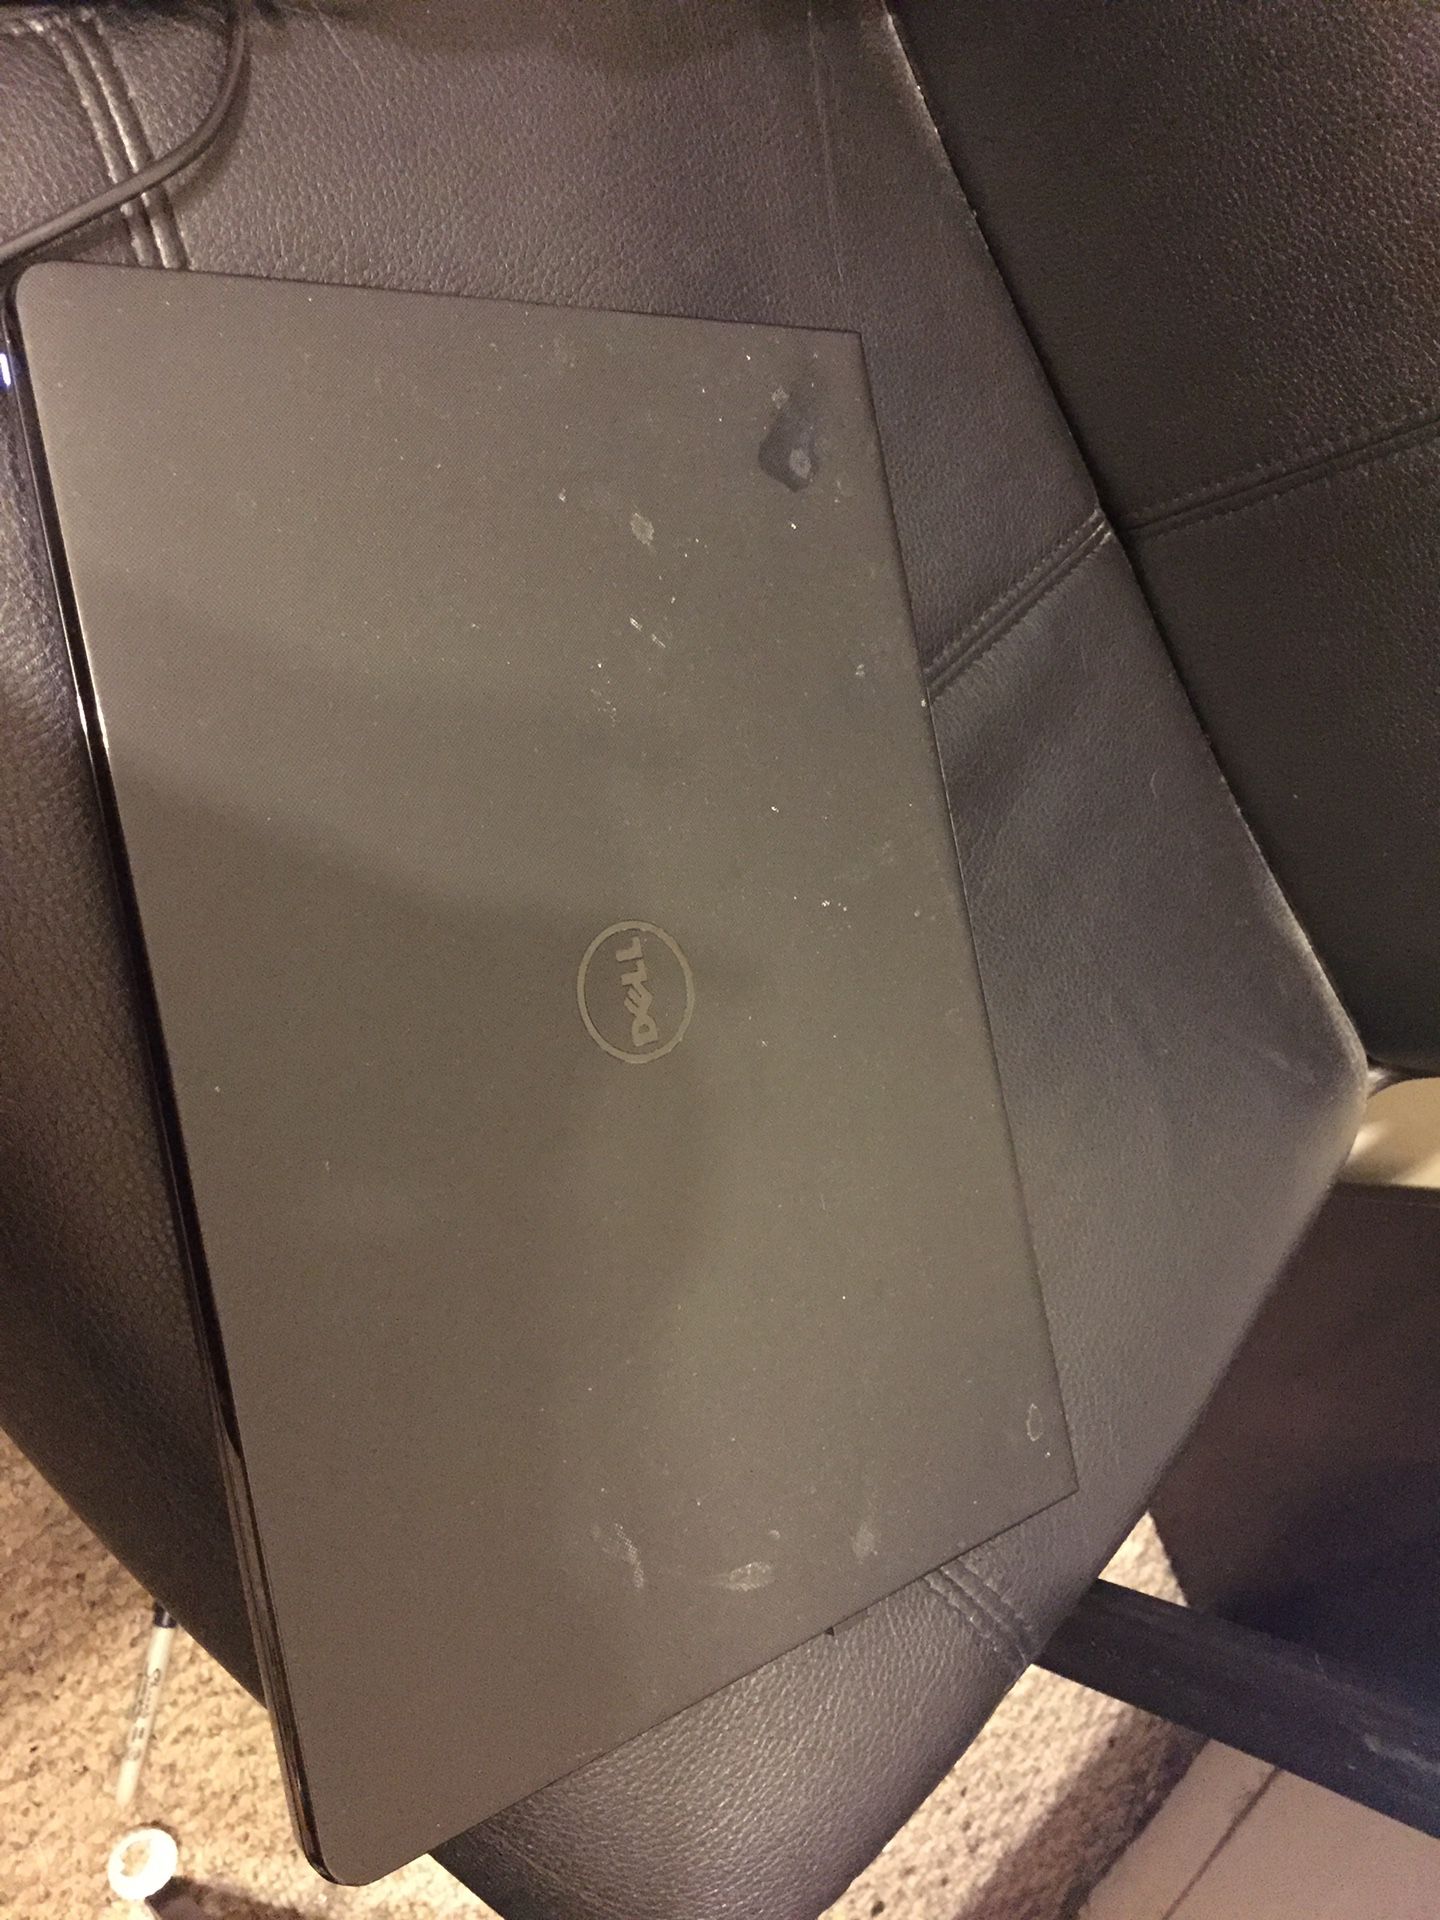 Dell inspirion 14 inch laptop